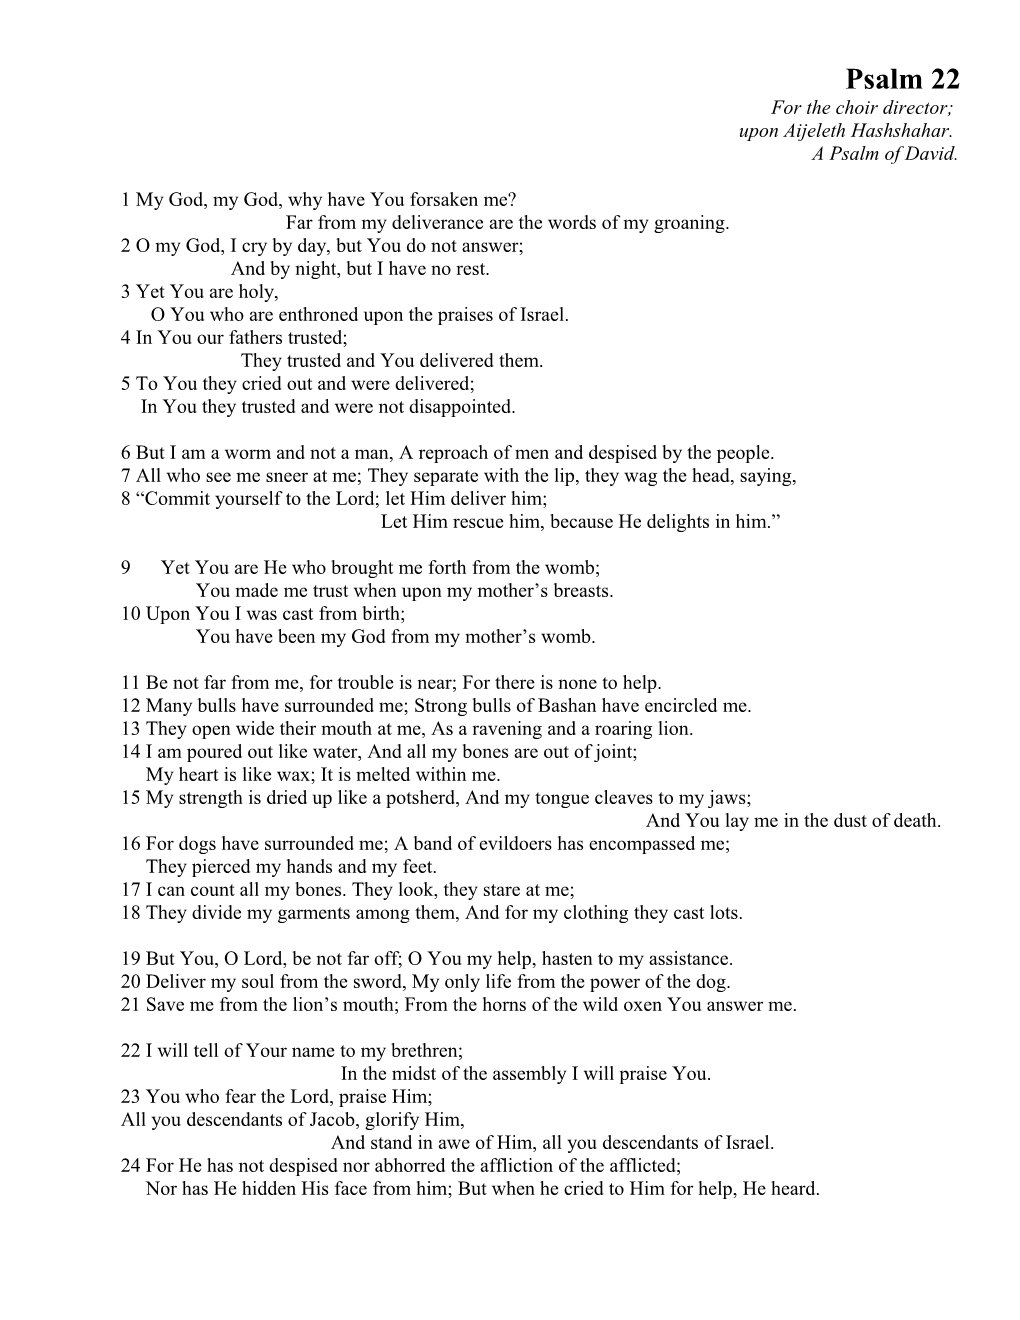 Psalm 22 for the Choir Director;